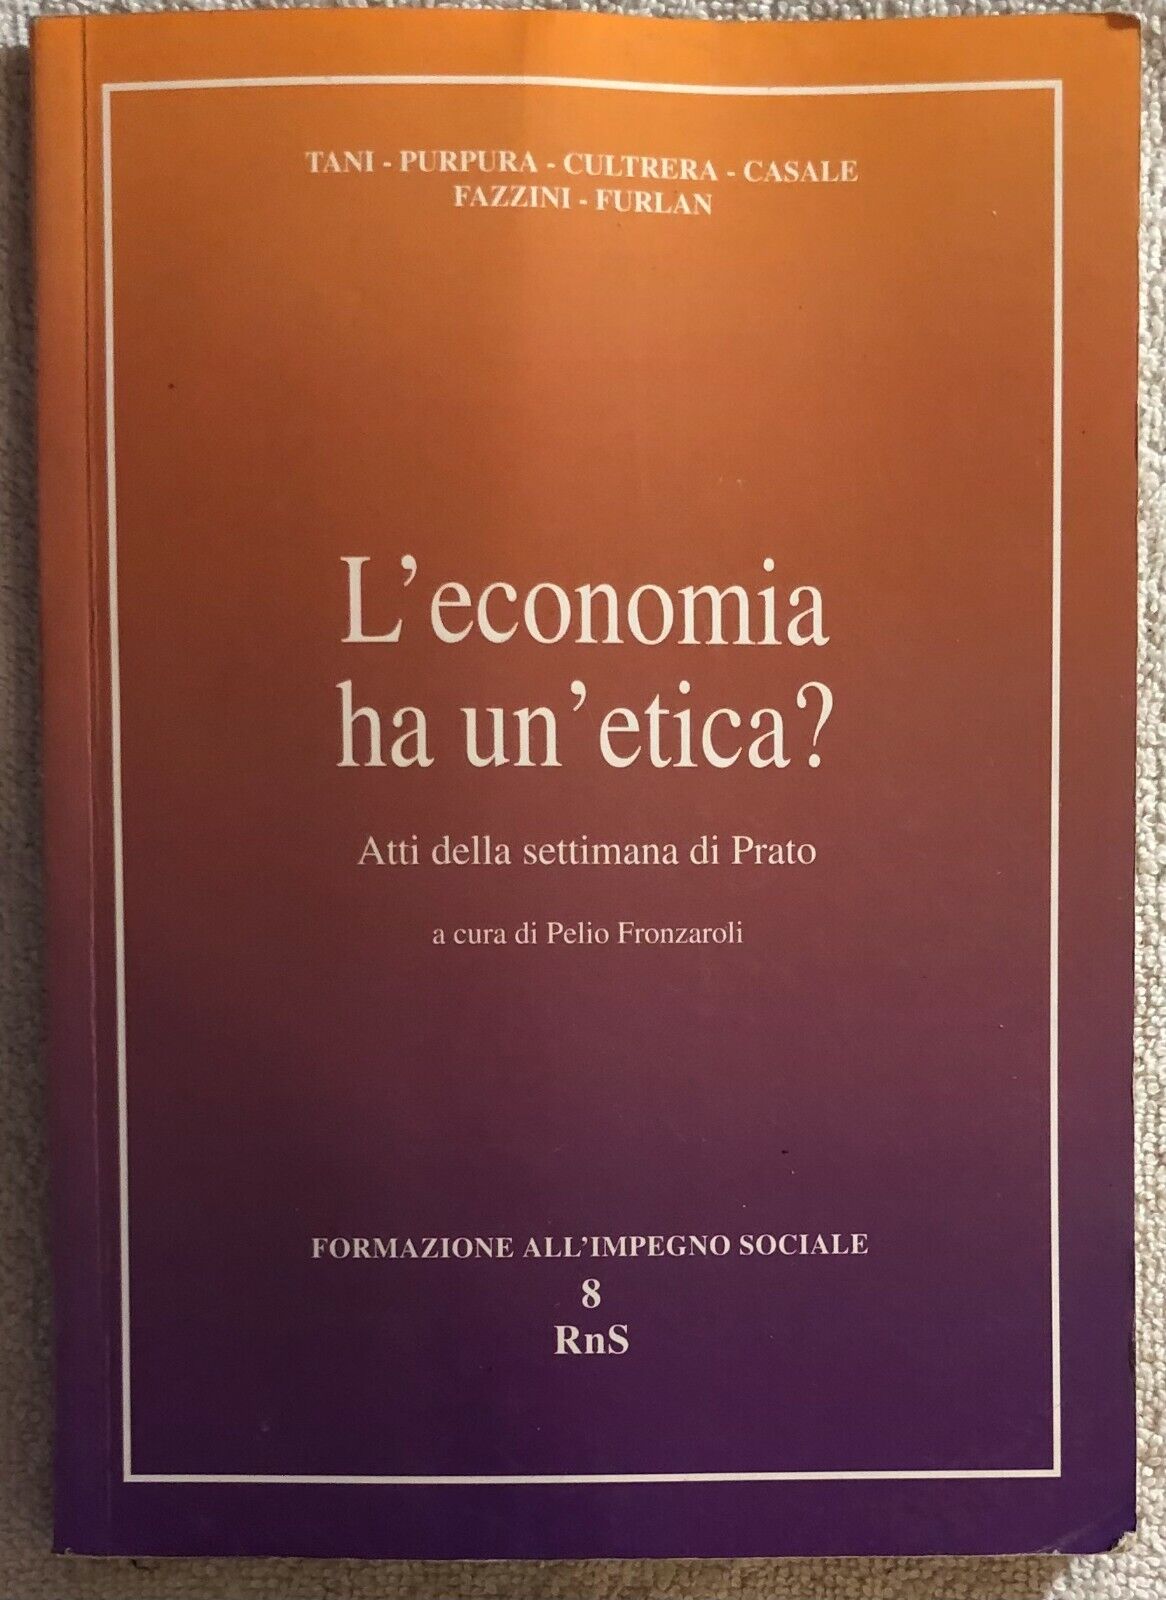 L'economia ha un?etica di Aa.vv.,  1996,  Rns